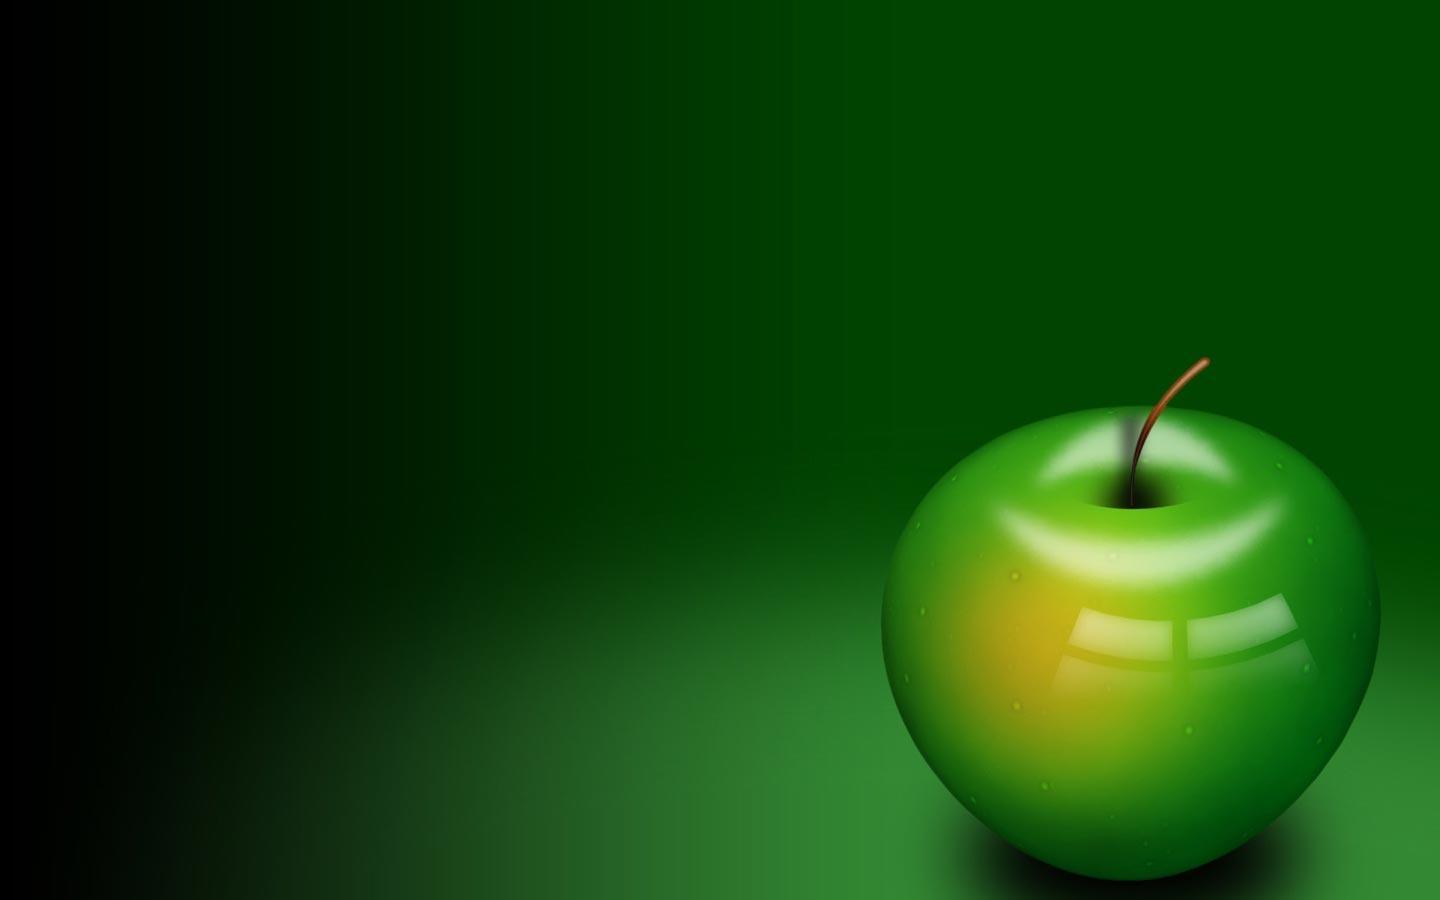 Desktop Wallpaper · Gallery · Computers · Apple Natural green